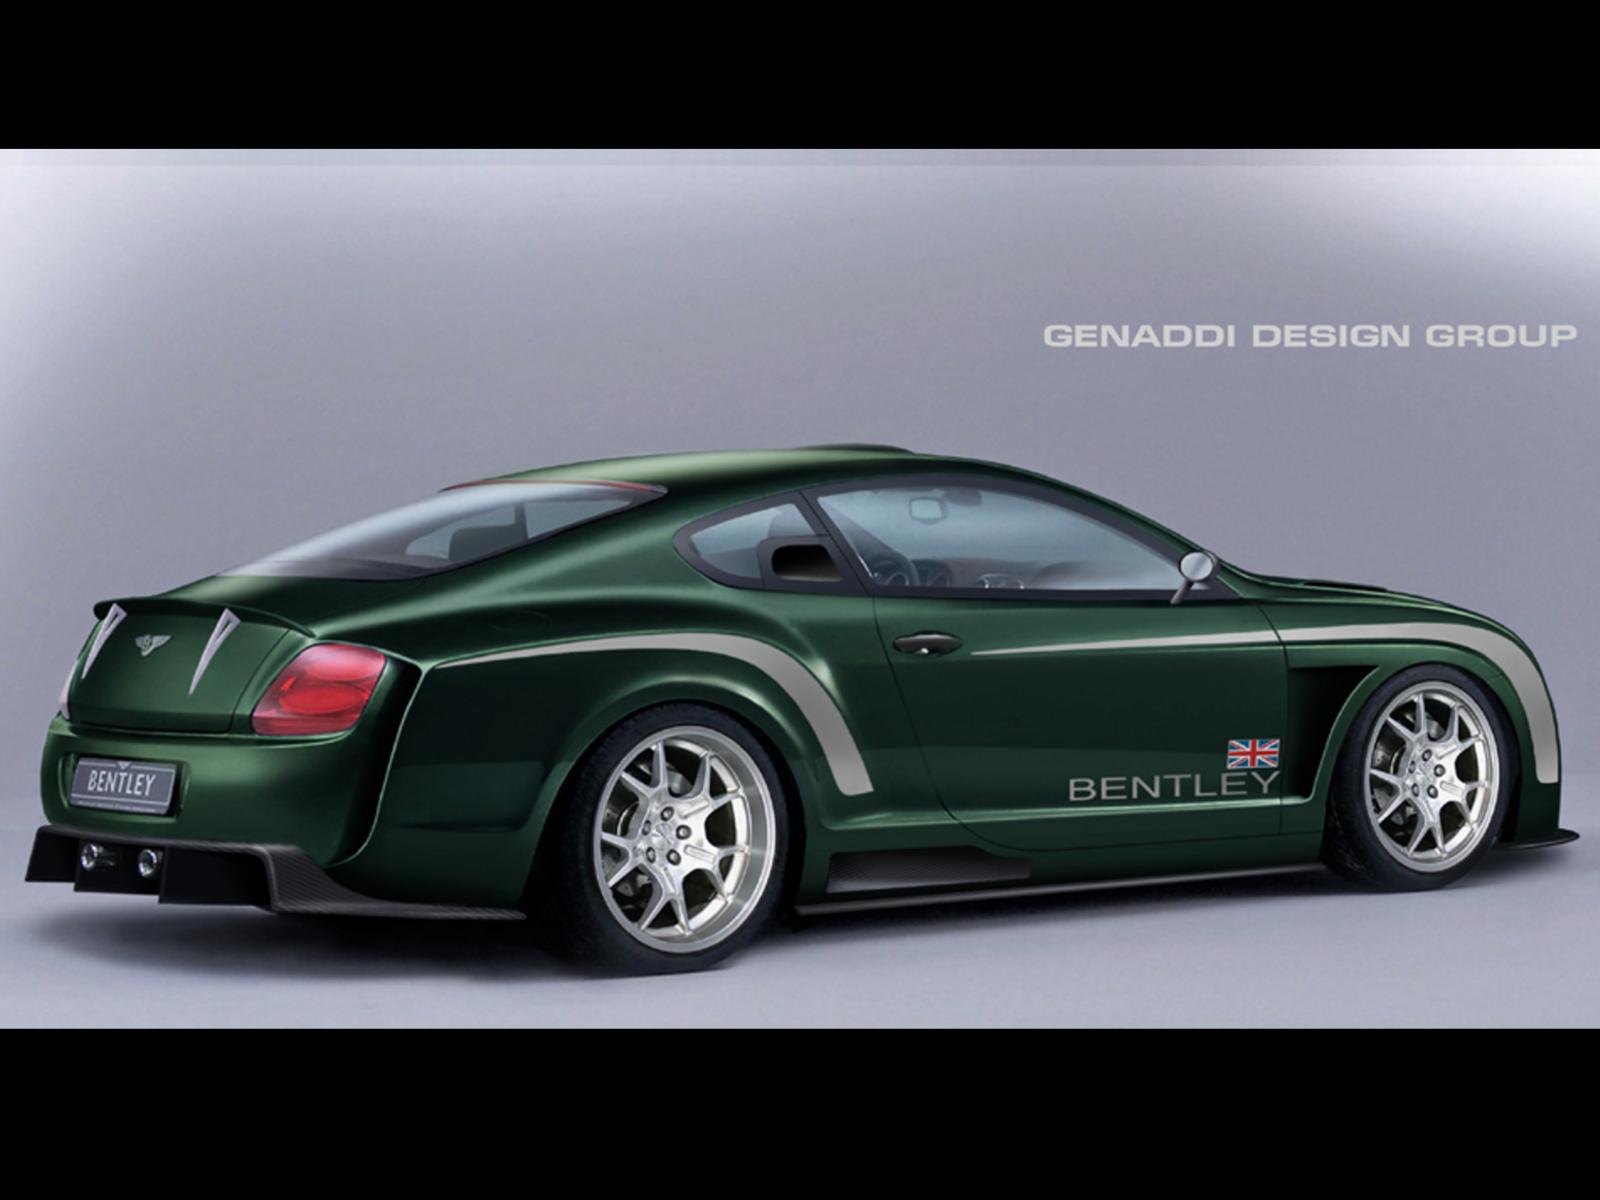 Bentley Genaddi Continental GT/LM photo 17270